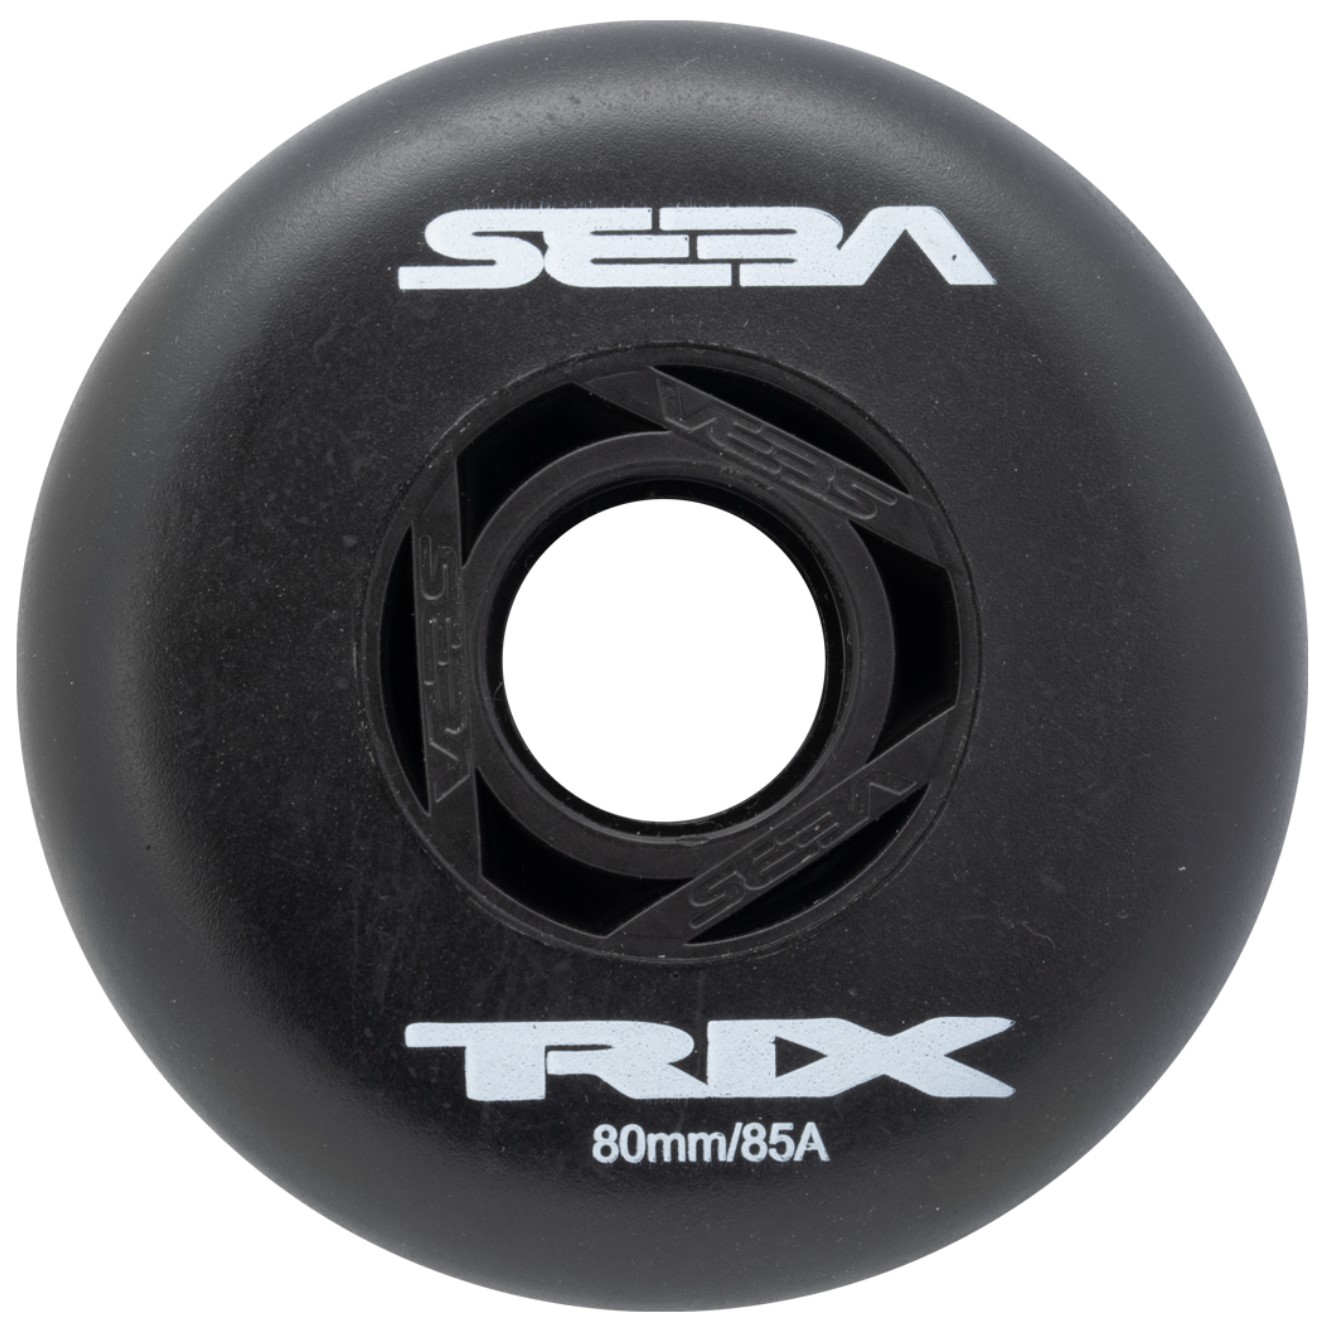 black inline skate Seba Trix Wheel 80 mm diameter and 85A durometer